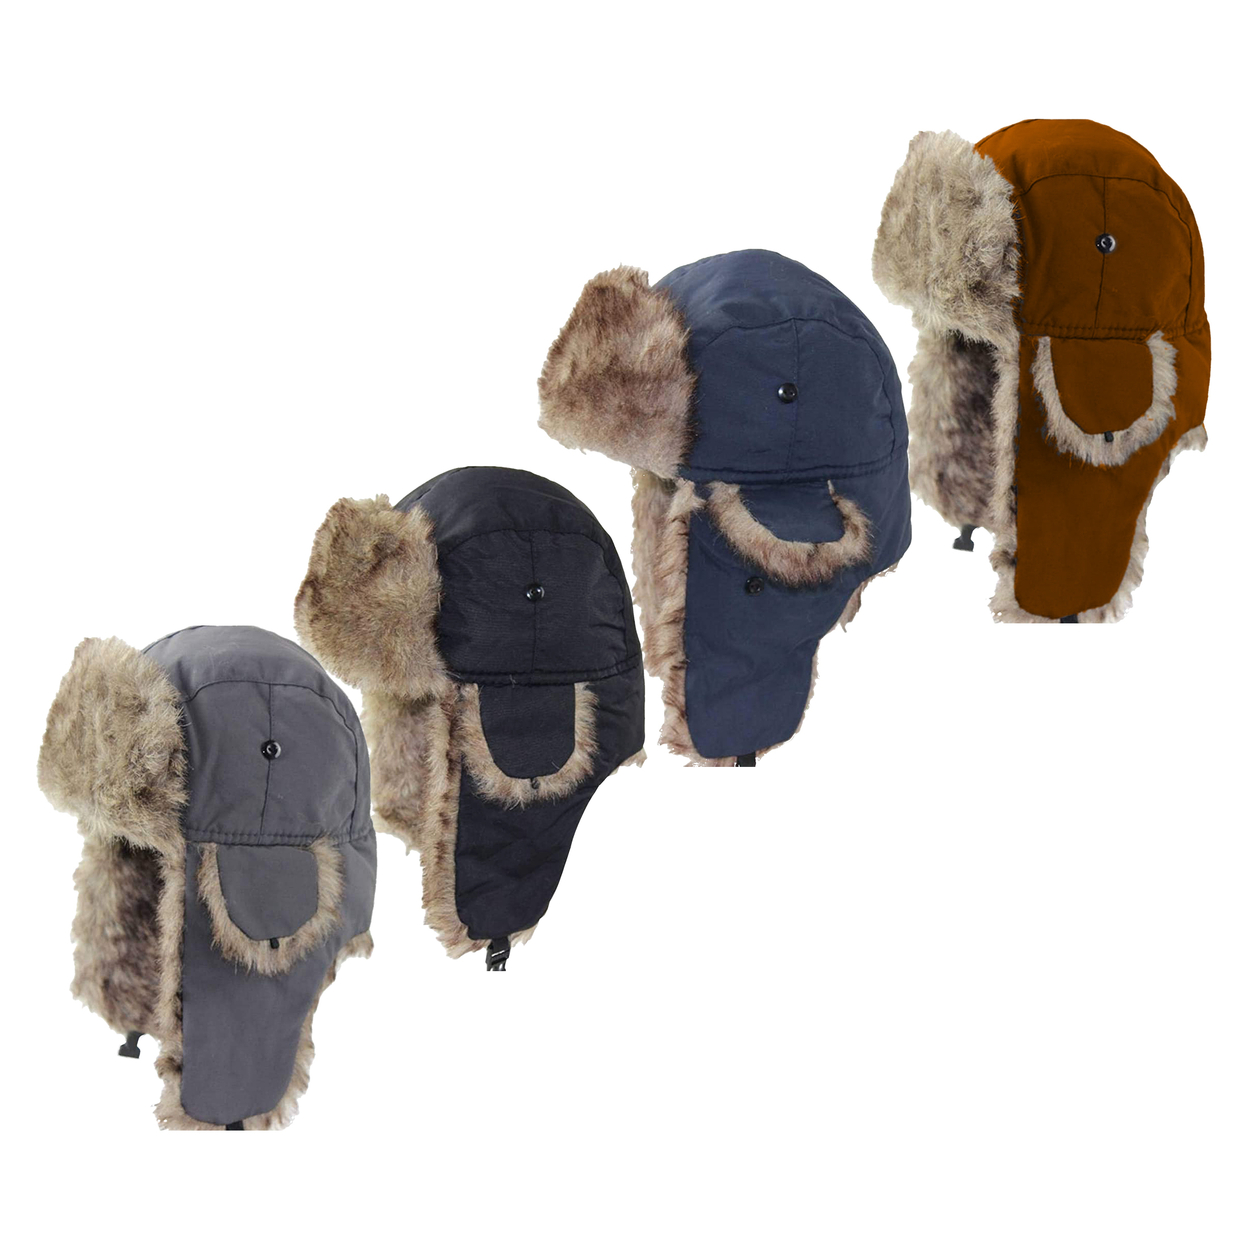 2-Pack: Men's Winter Warm Soft Cozy Russian Ushanka Faux Fur Hat With Ear- Flaps - Black & Black